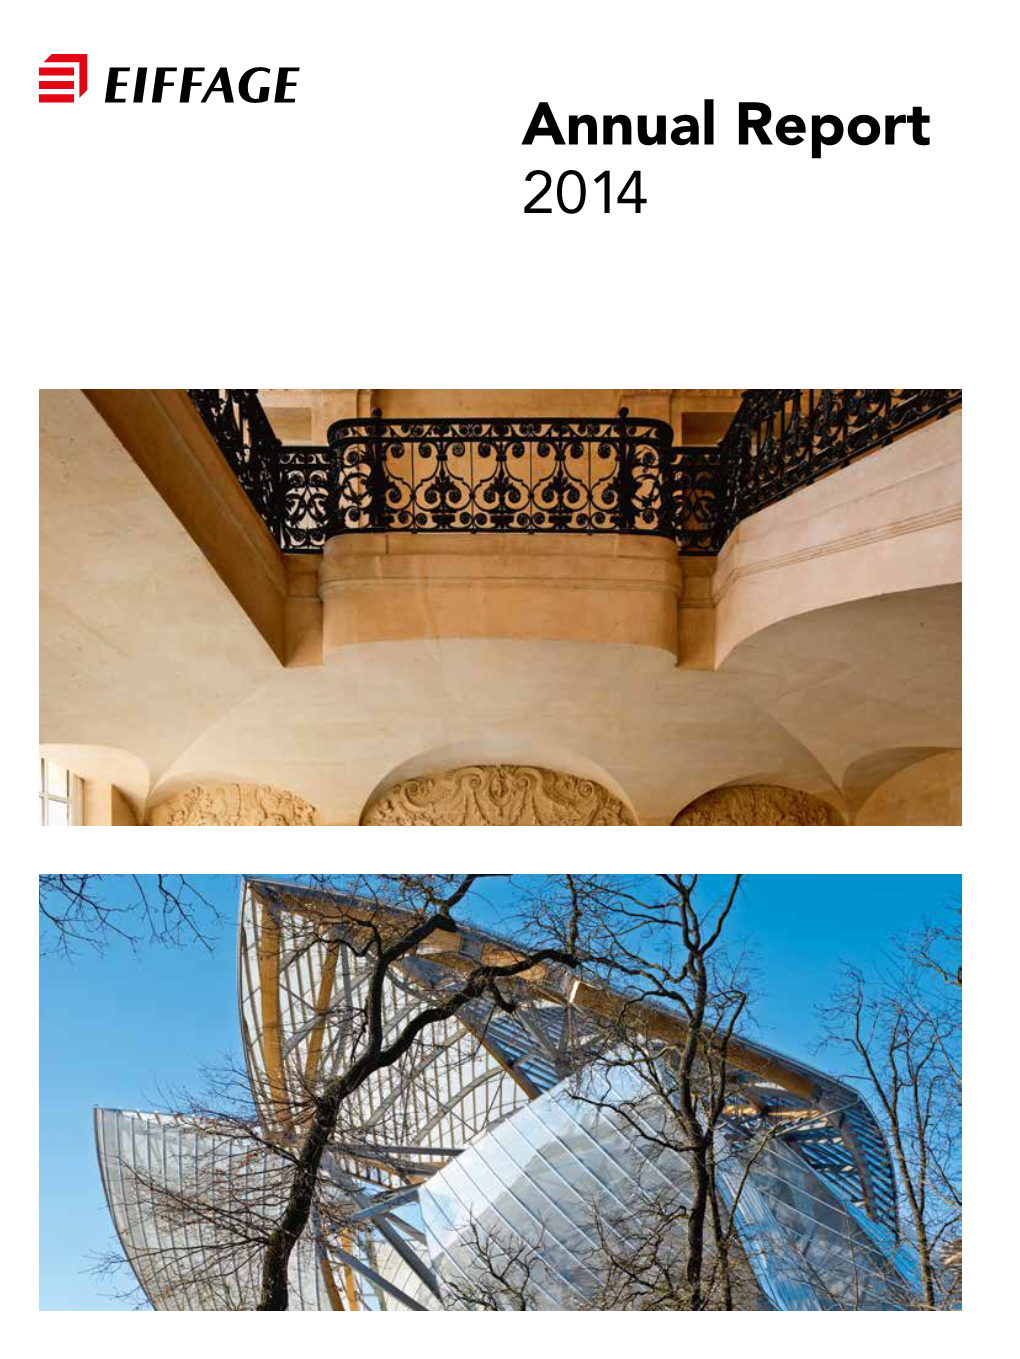 Annual Report 2014 Annual Report 2014 Contents